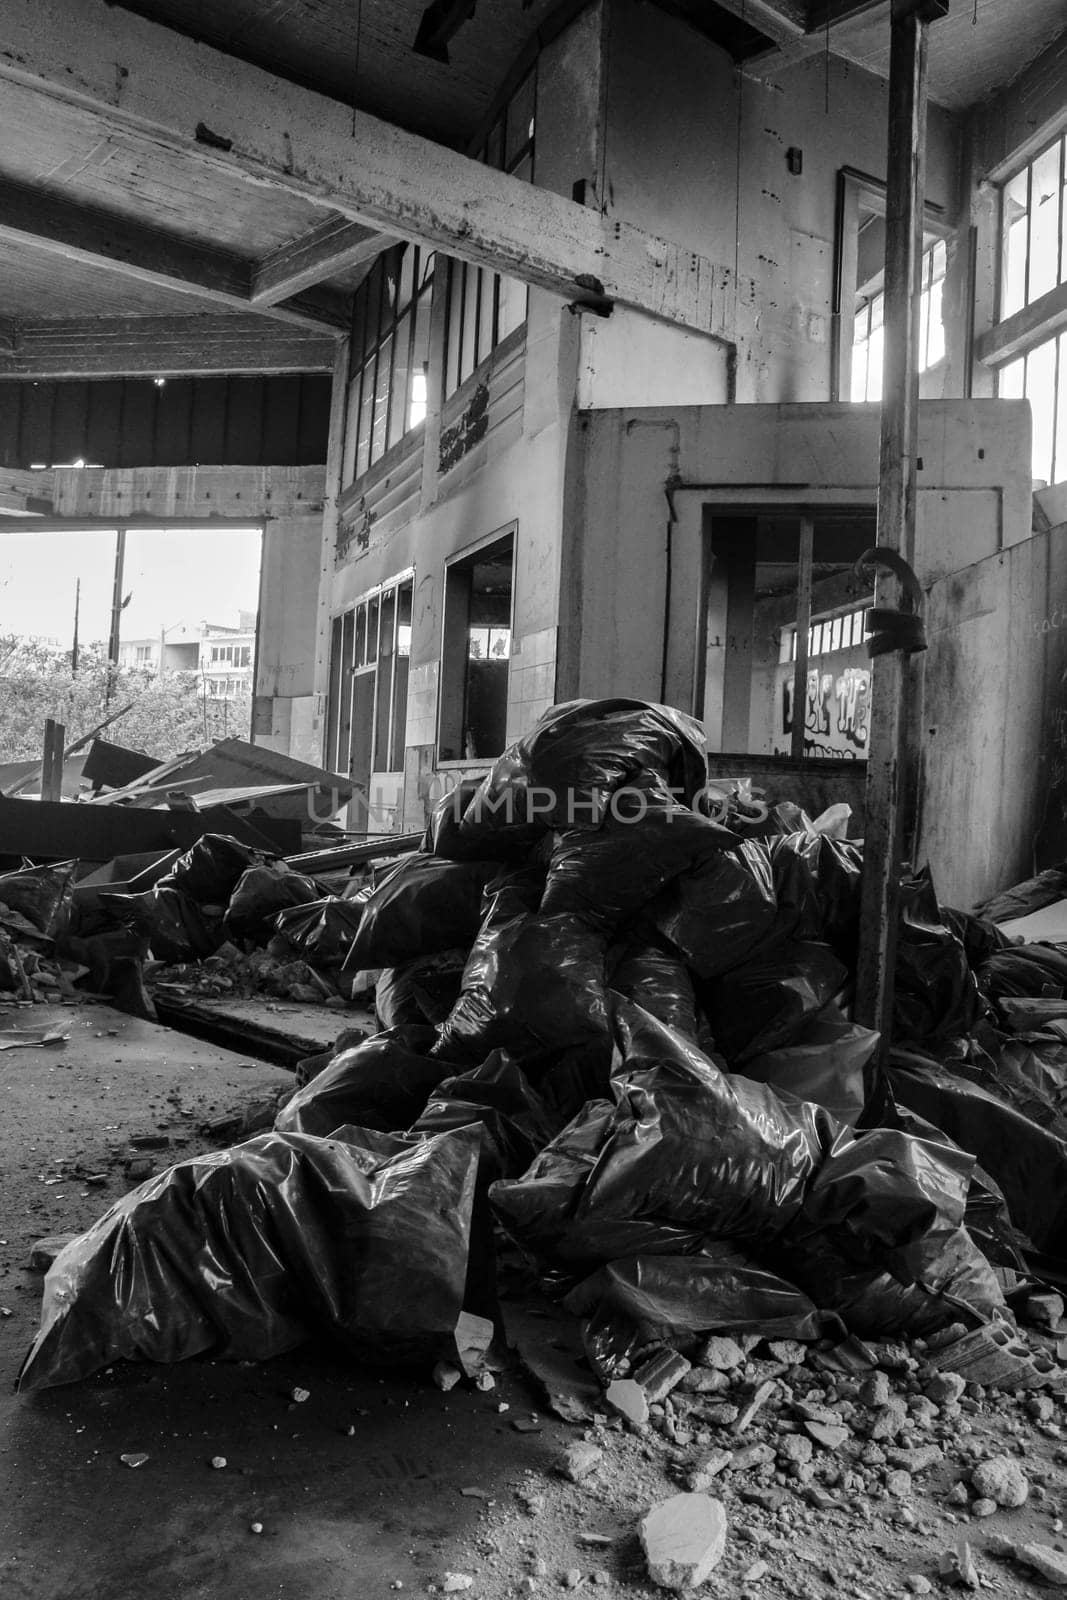 Urban Debris: The Bagged Waste Metropolis by DakotaBOldeman